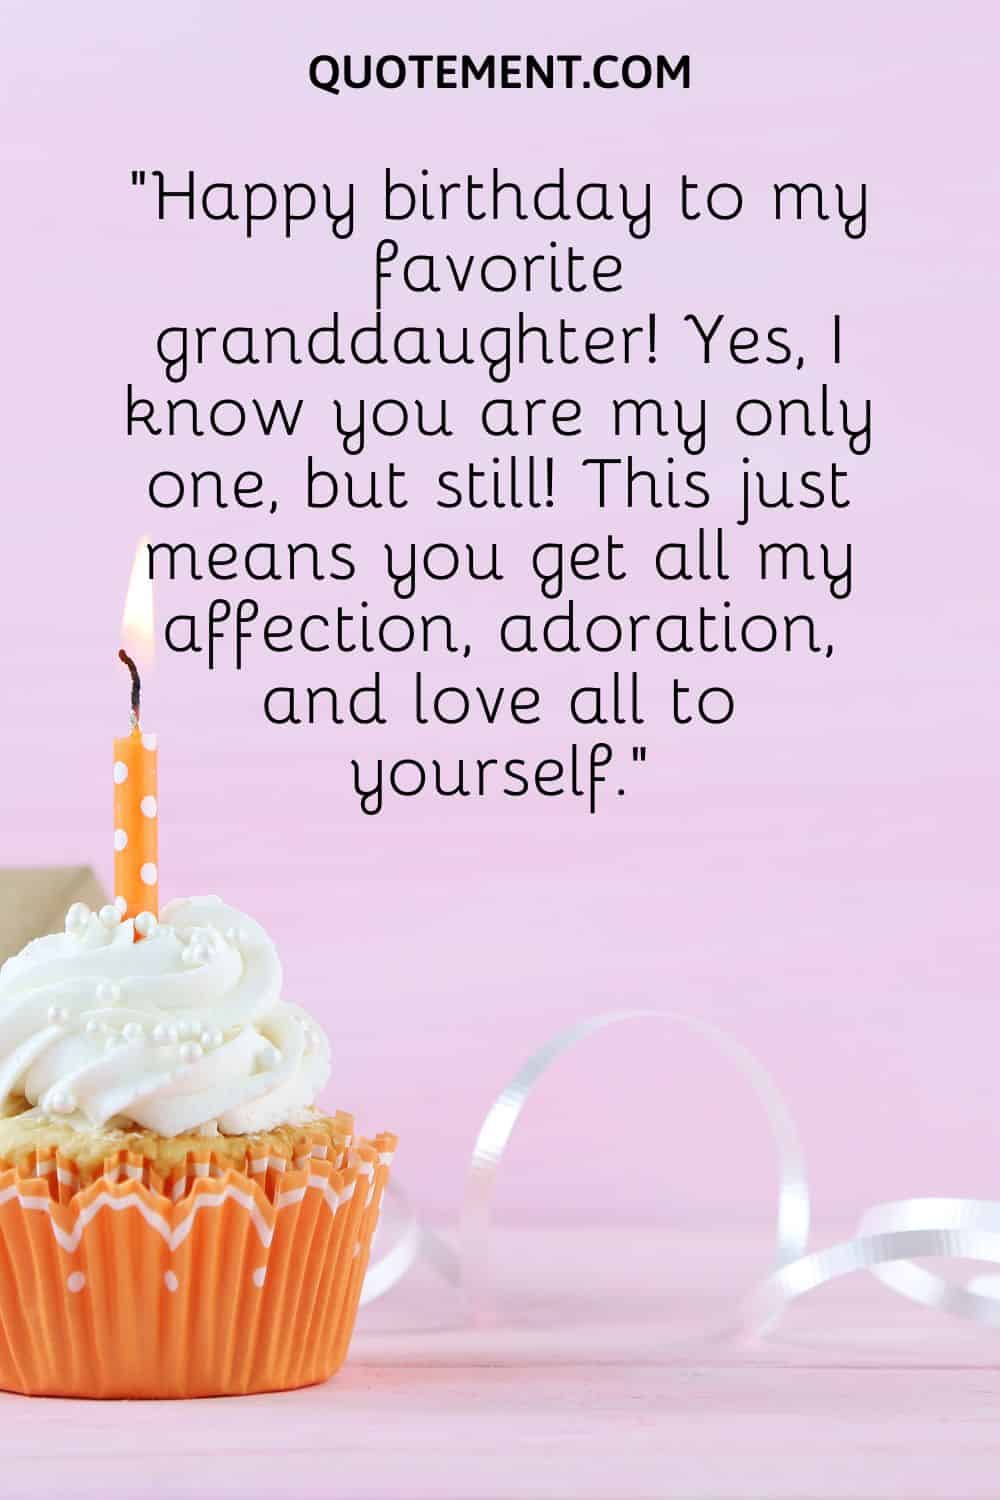 Happy birthday to my favorite granddaughter